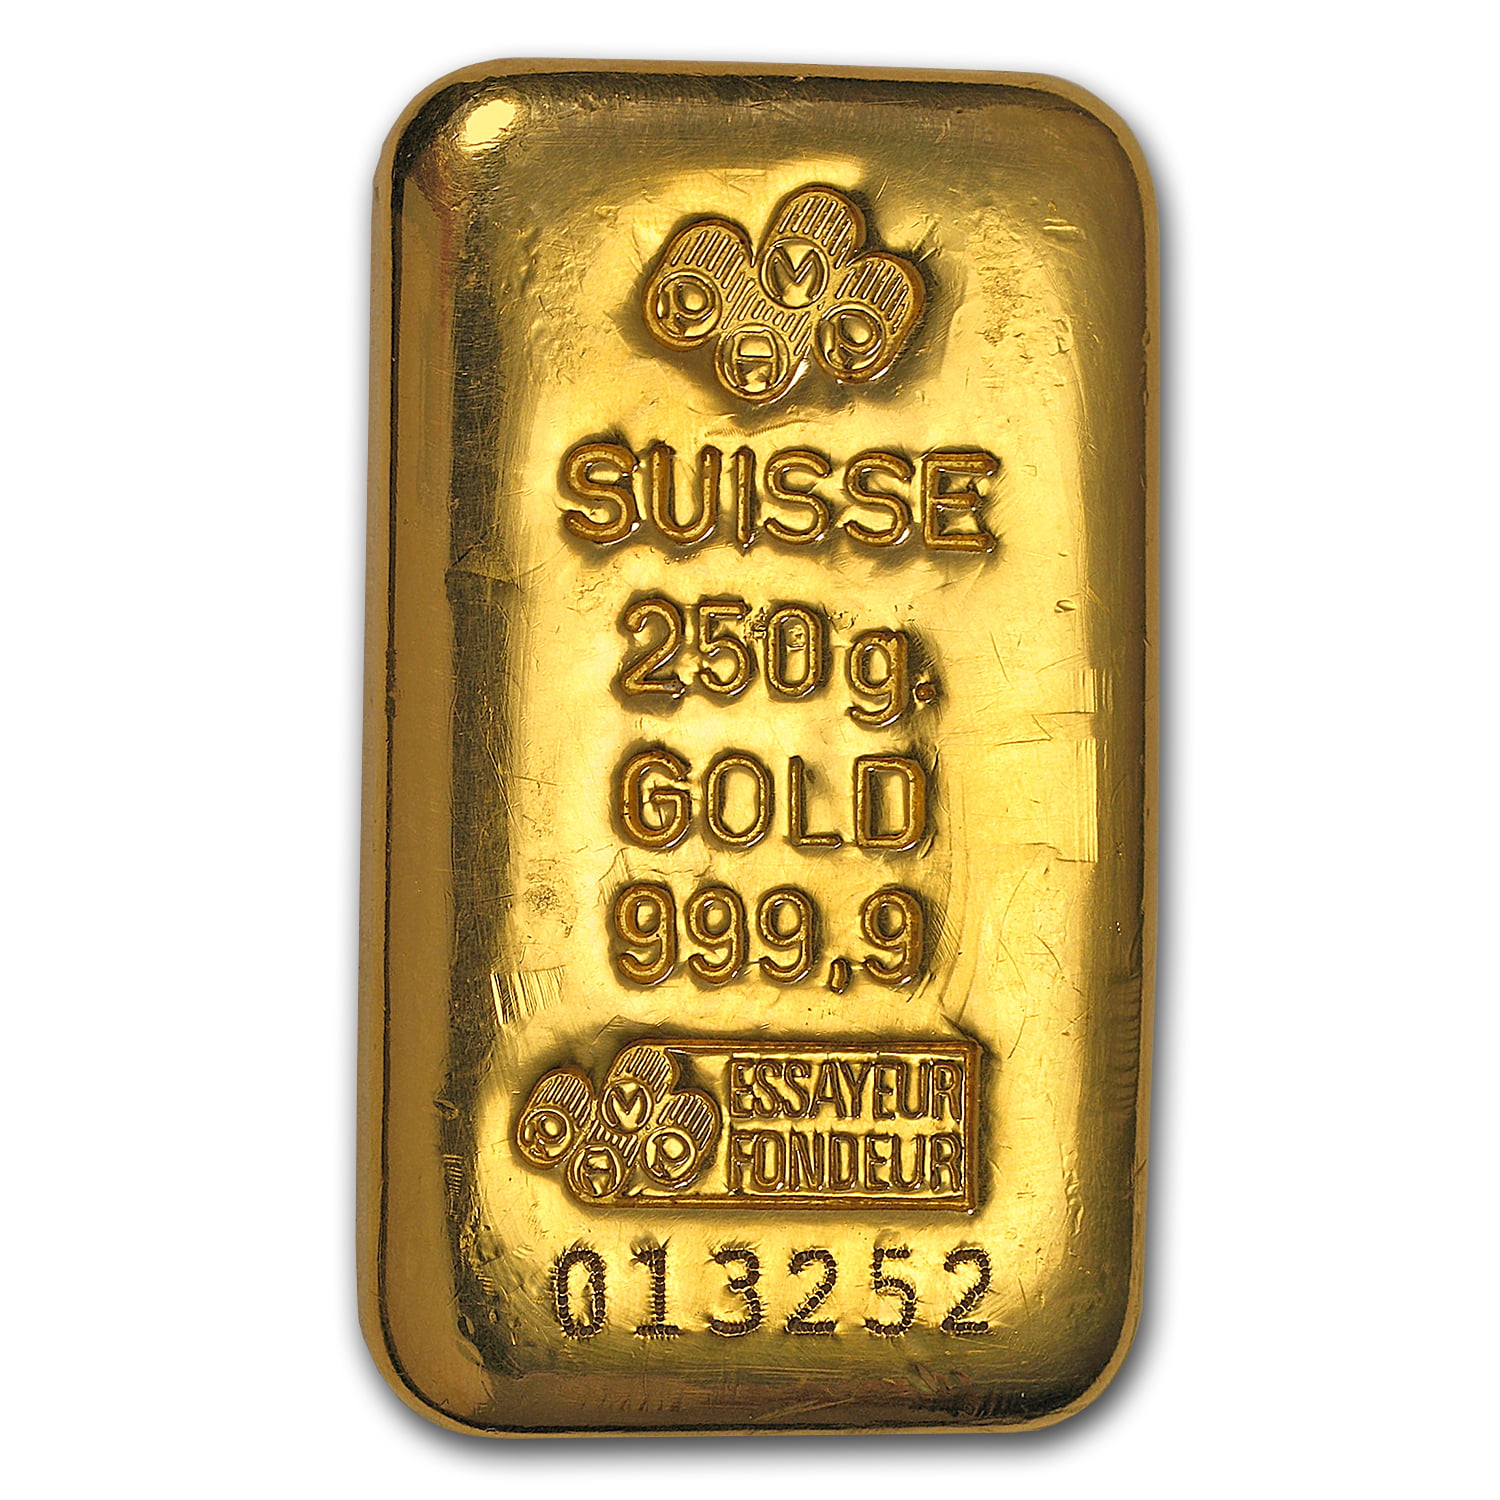 250 грамм золота. Слиток золота 250 грамм. 250 Граммовые слитки золота. Слиток золота 100 грамм. Слиток золота СССР 250 грамм.